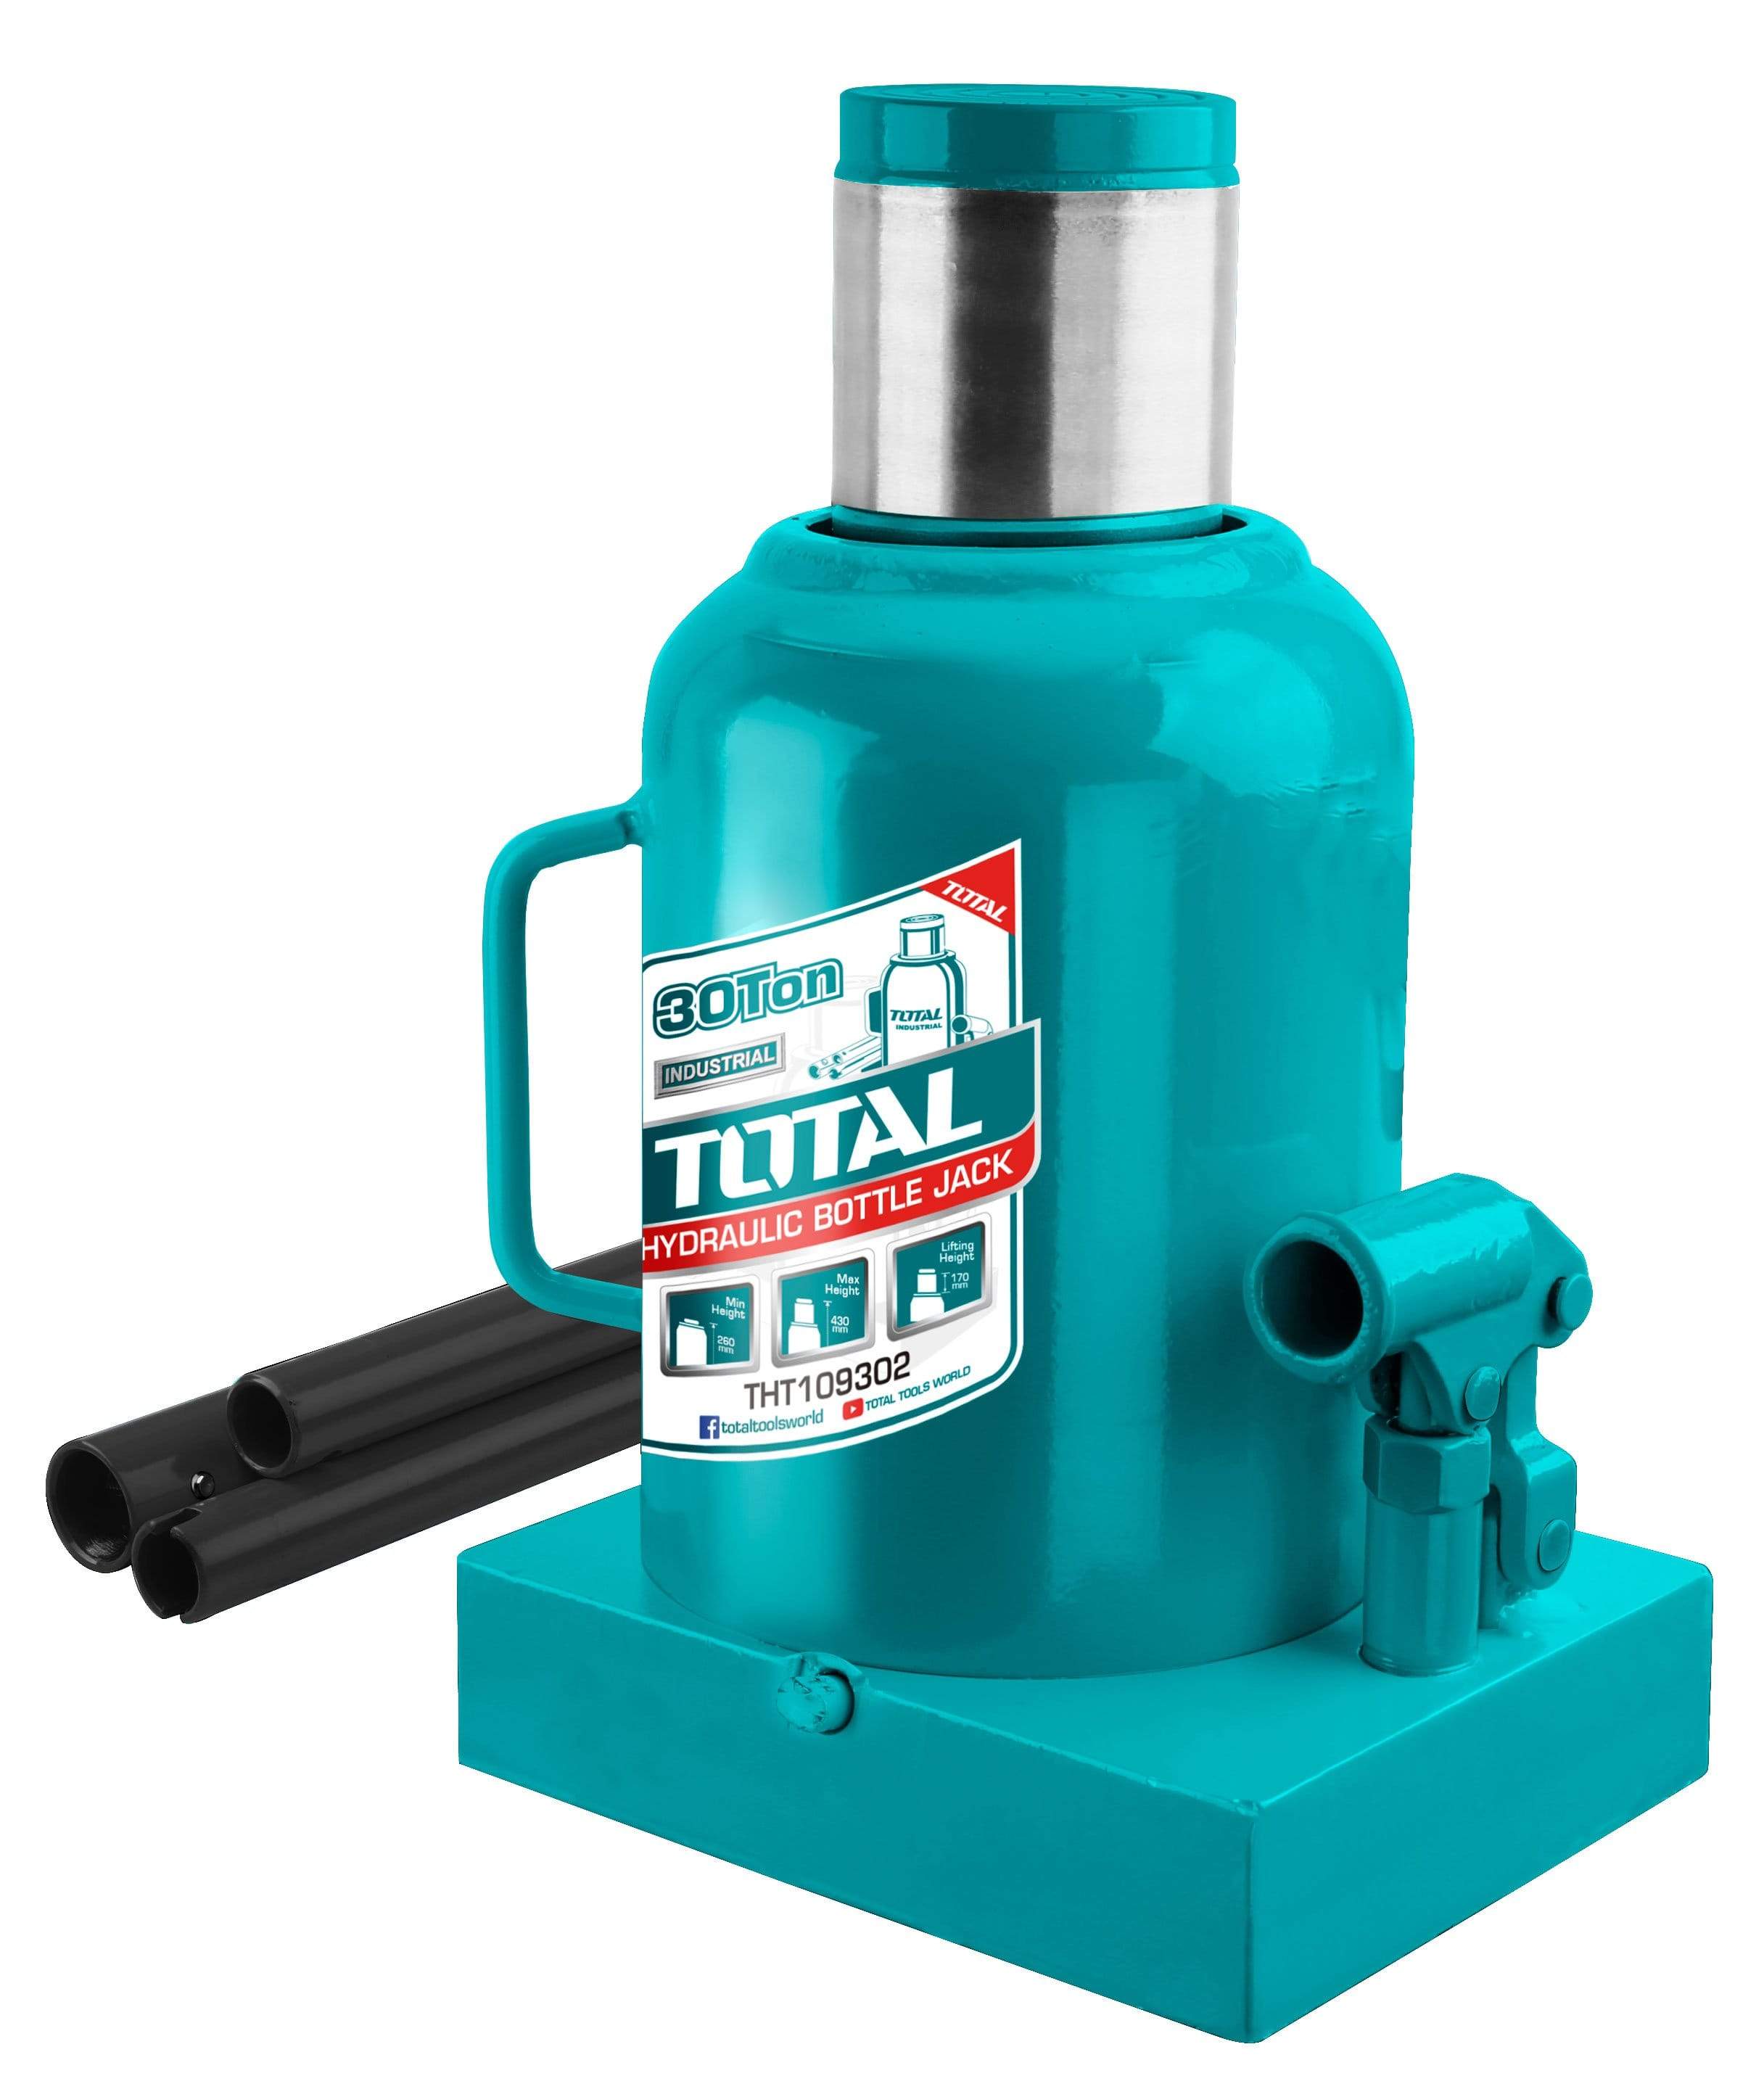 Total Hydraulic Bottle Jack - 2, 4, 10 & 12 Ton | Supply Master | Accra, Ghana Tools Building Steel Engineering Hardware tool